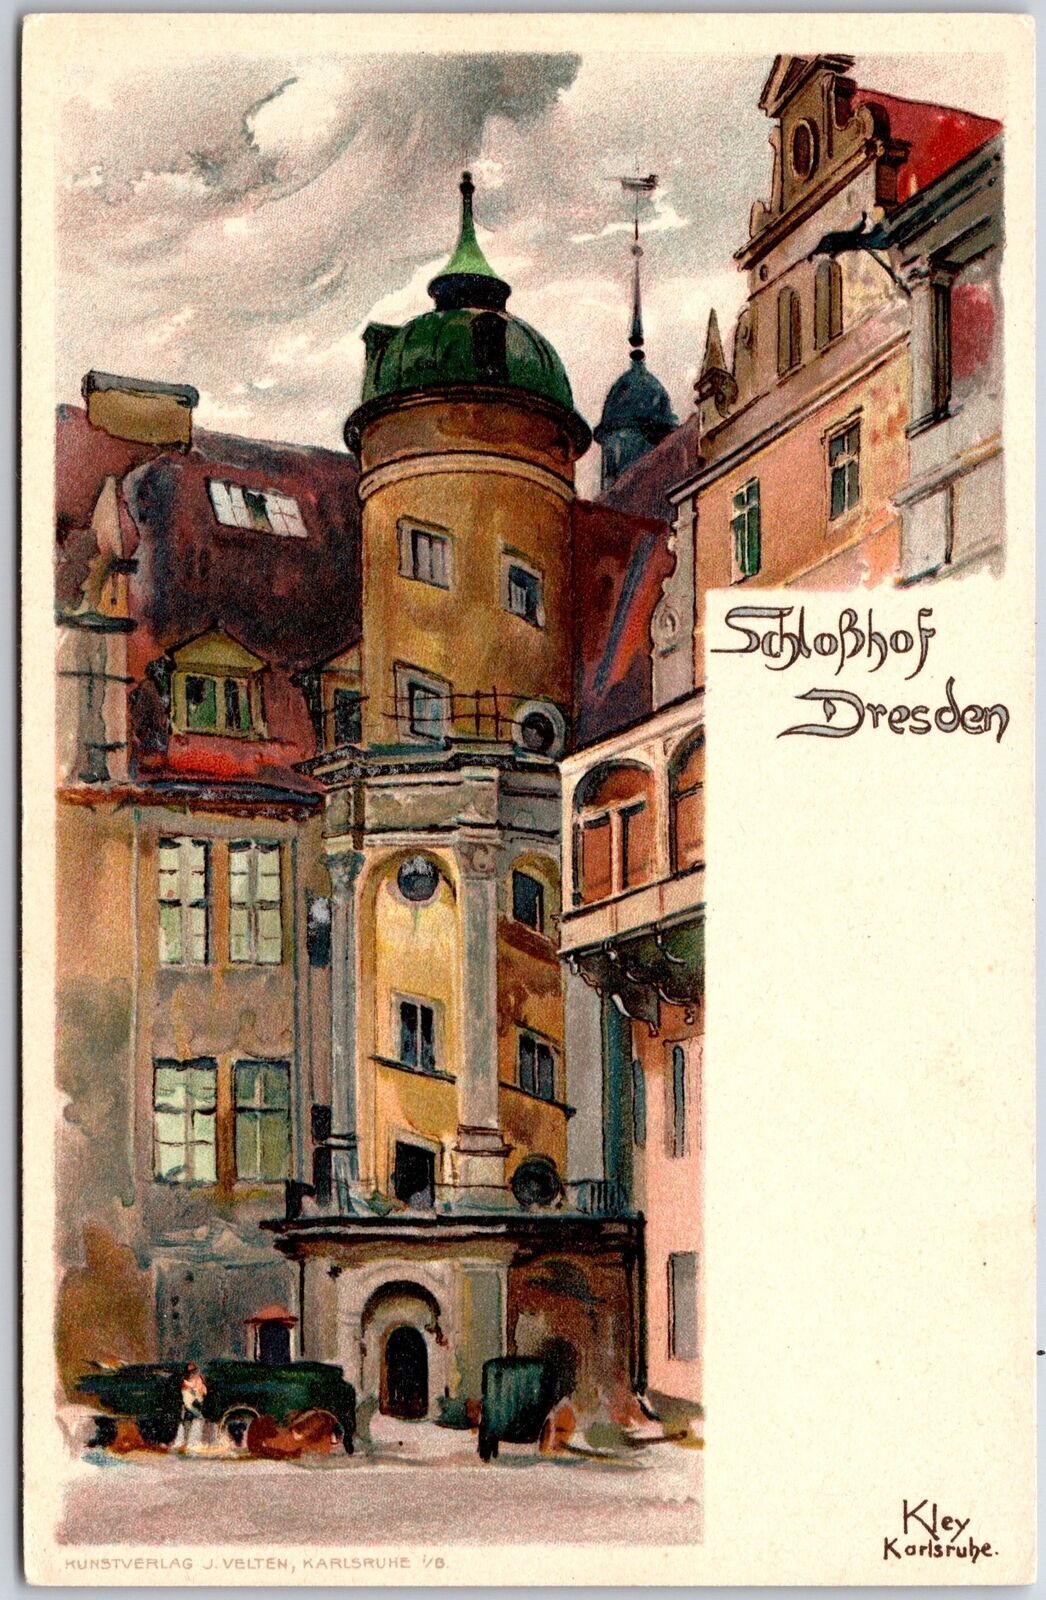 Schlobhof Dresden Germany Castle or Royal Palace Building Postcard